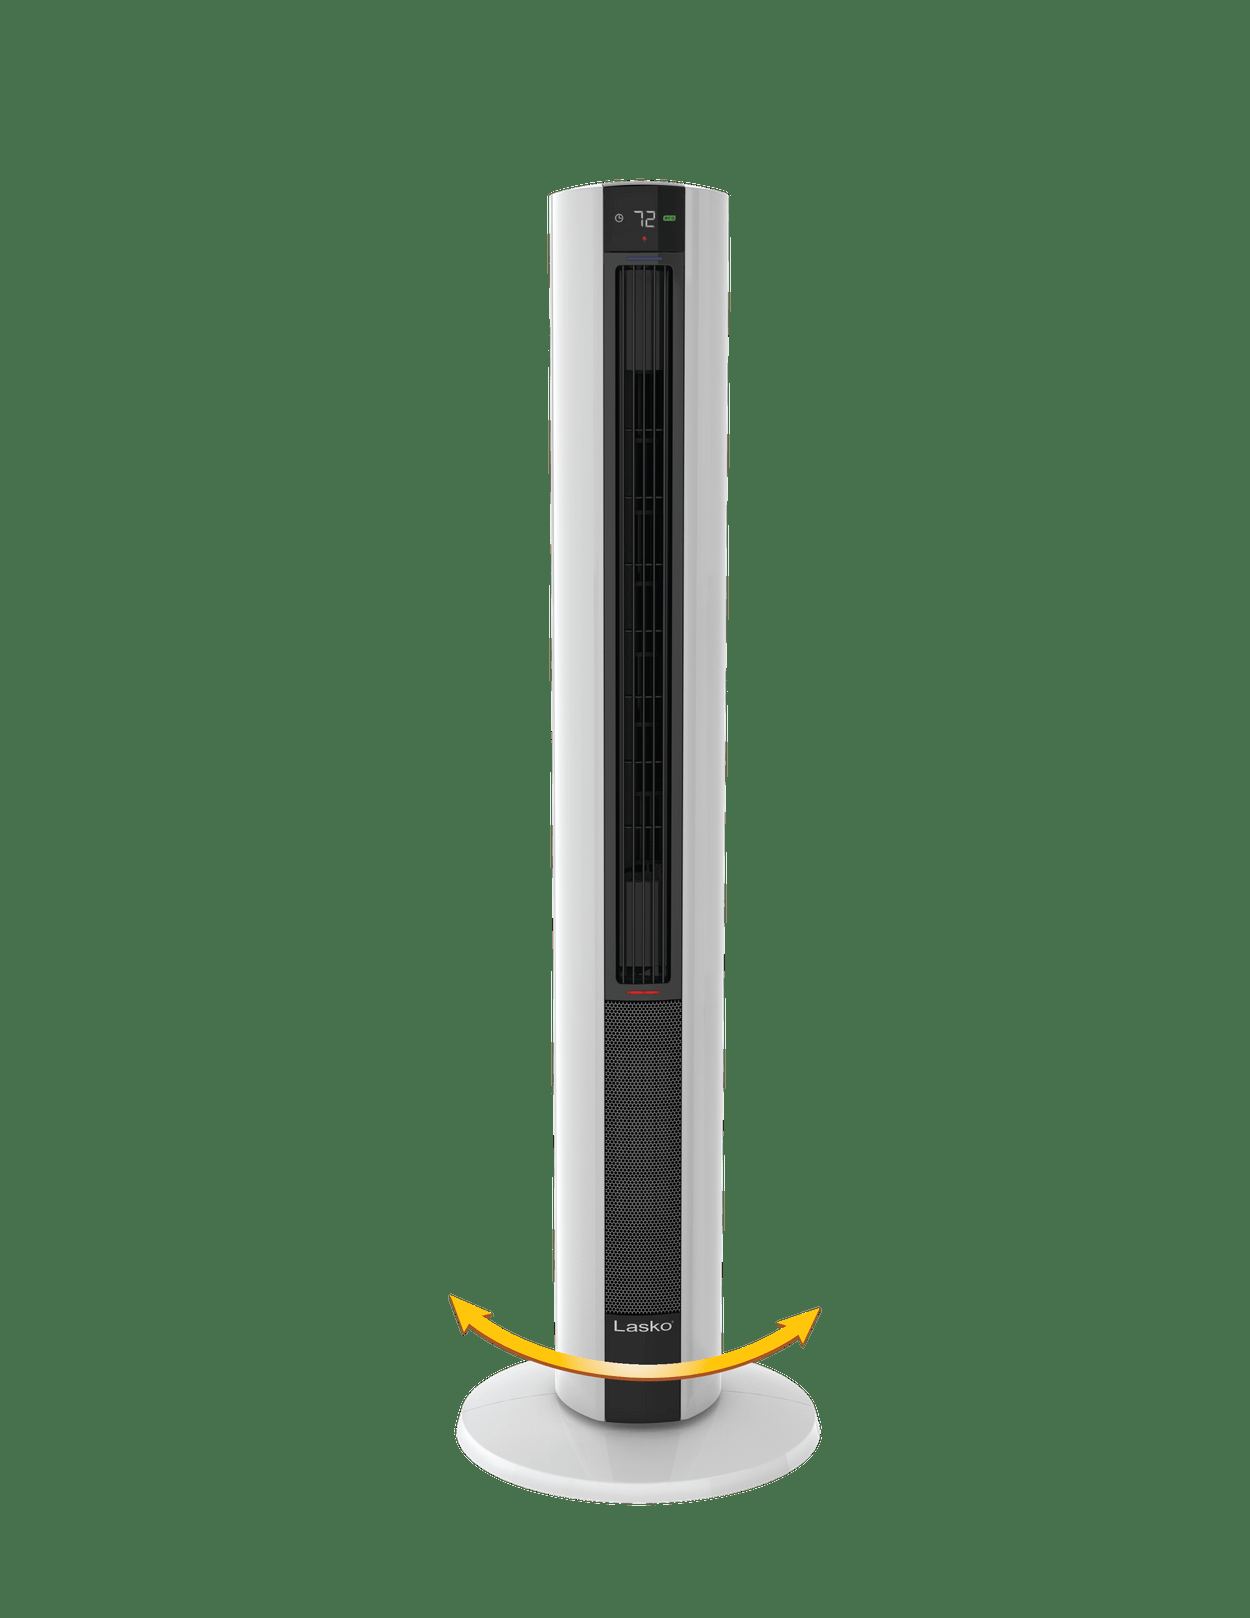 Lasko All Season Tower Fan Heater In One pertaining to dimensions 1250 X 1618